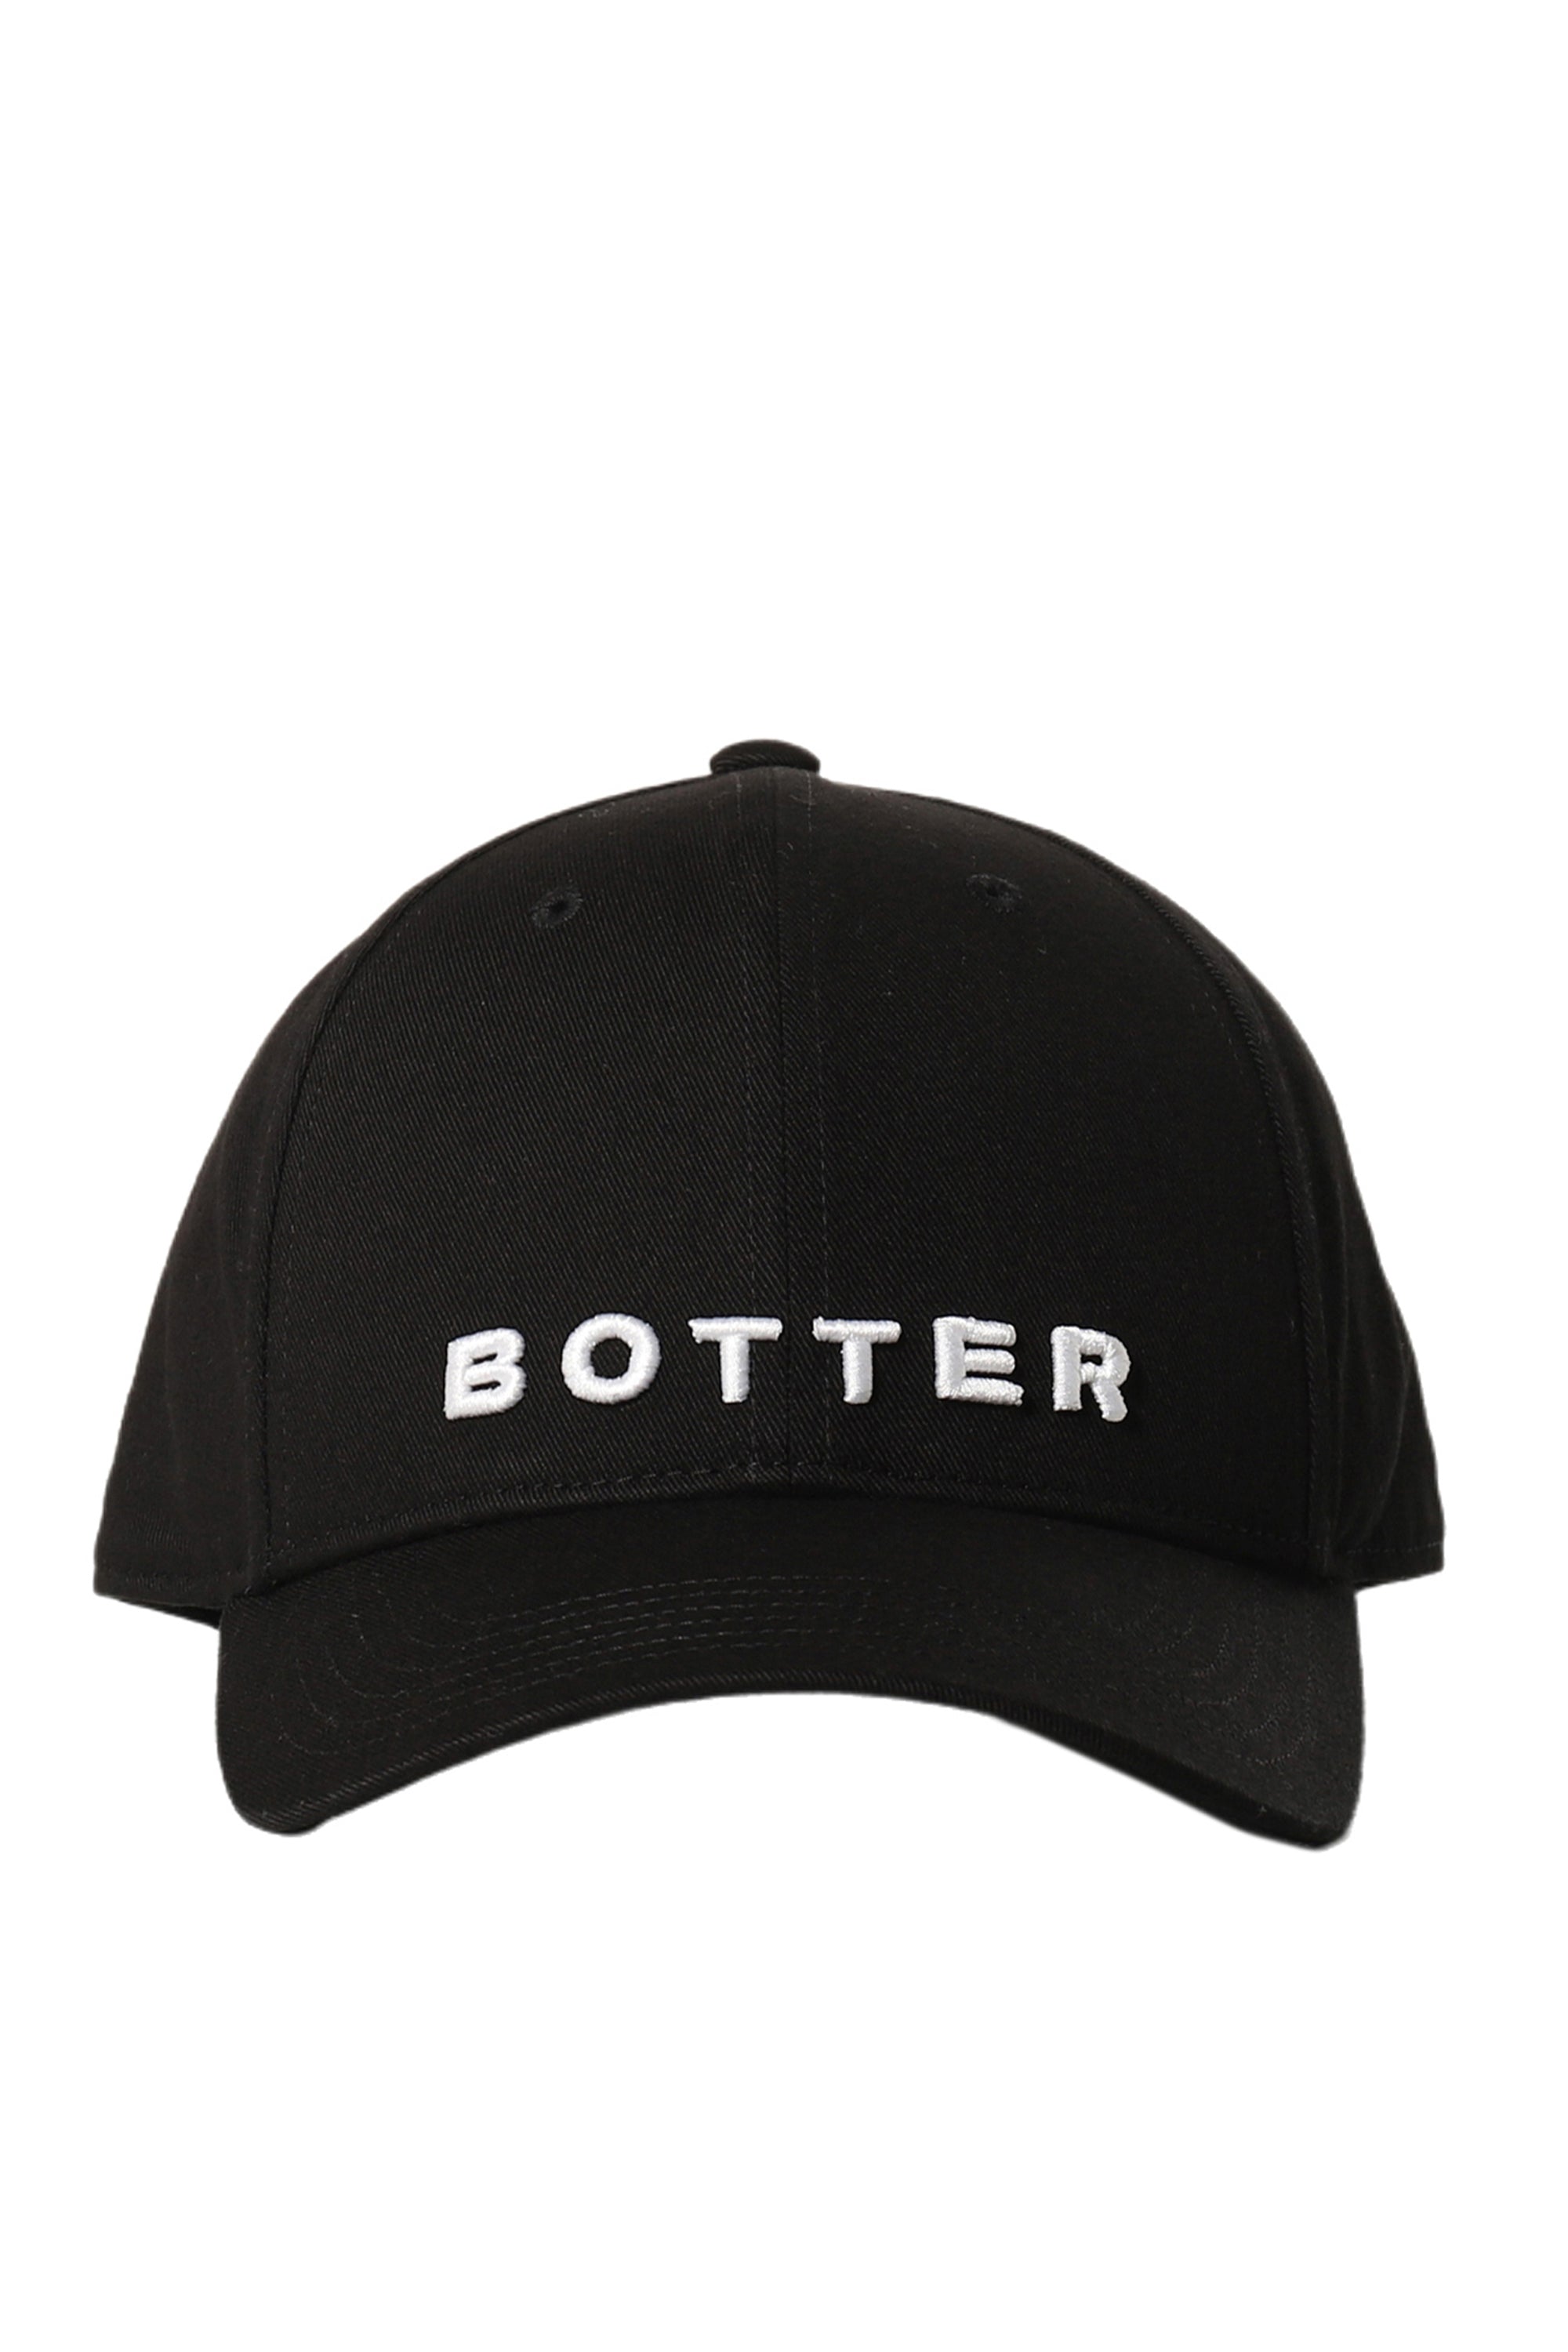 botter CLASSIC CAP WITH STITCHES / GRNcap